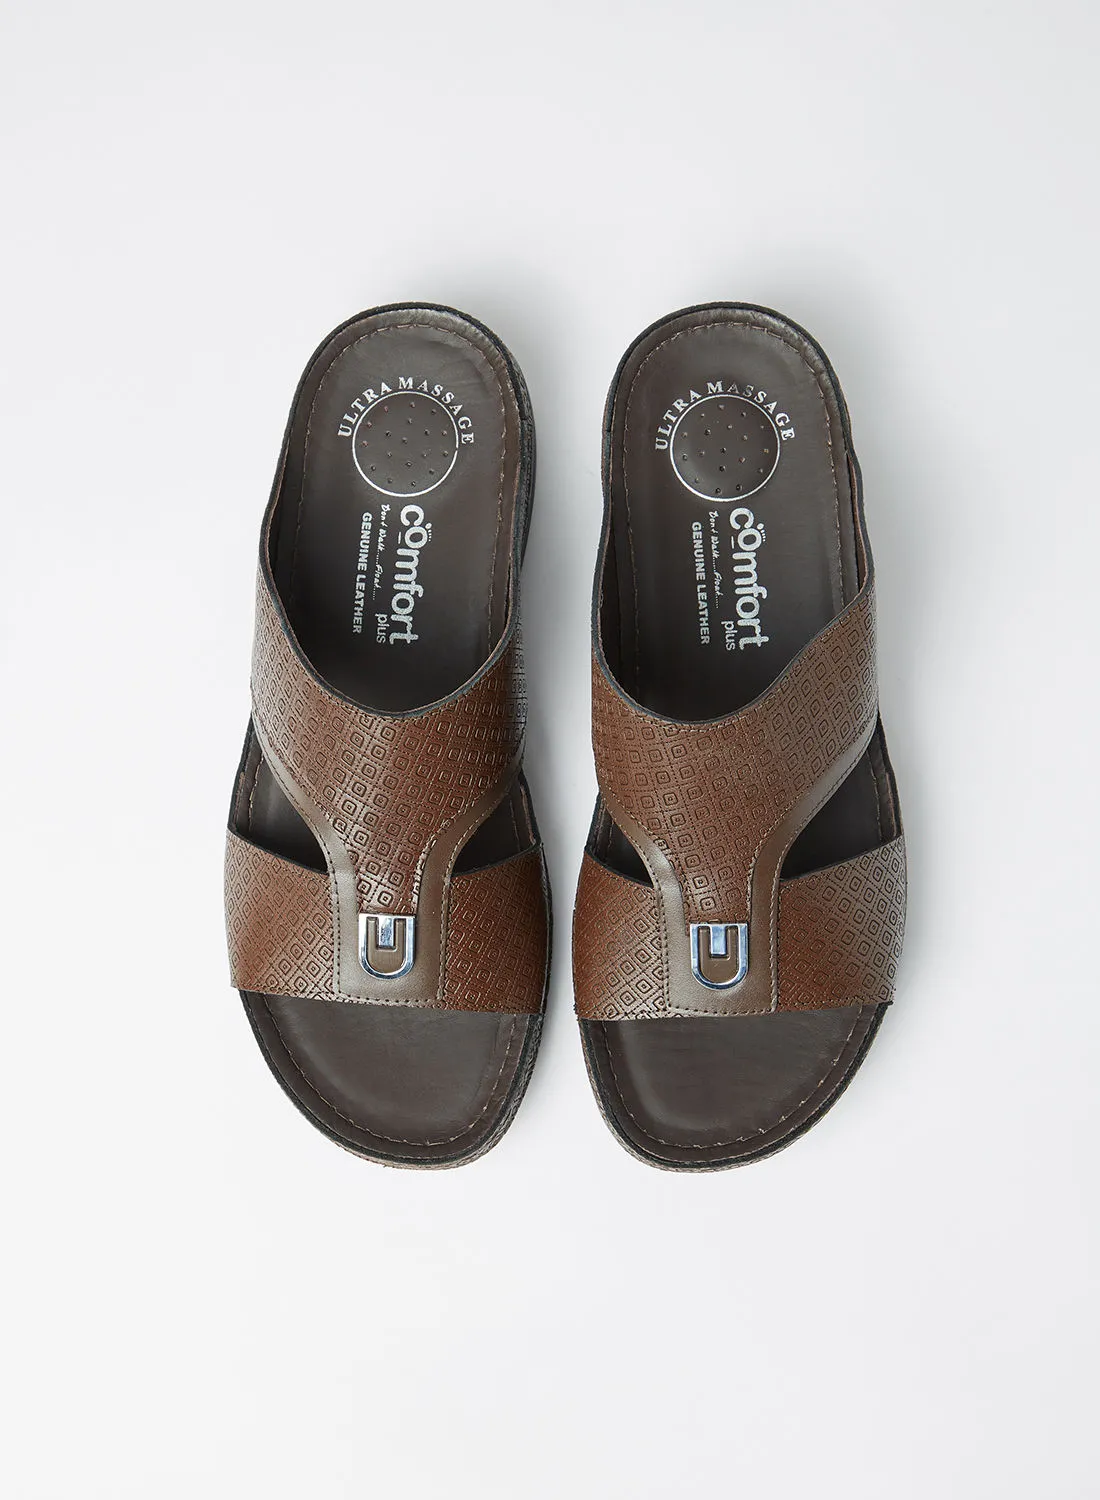 Comfort Plus Patterned Strap Sandals Brown